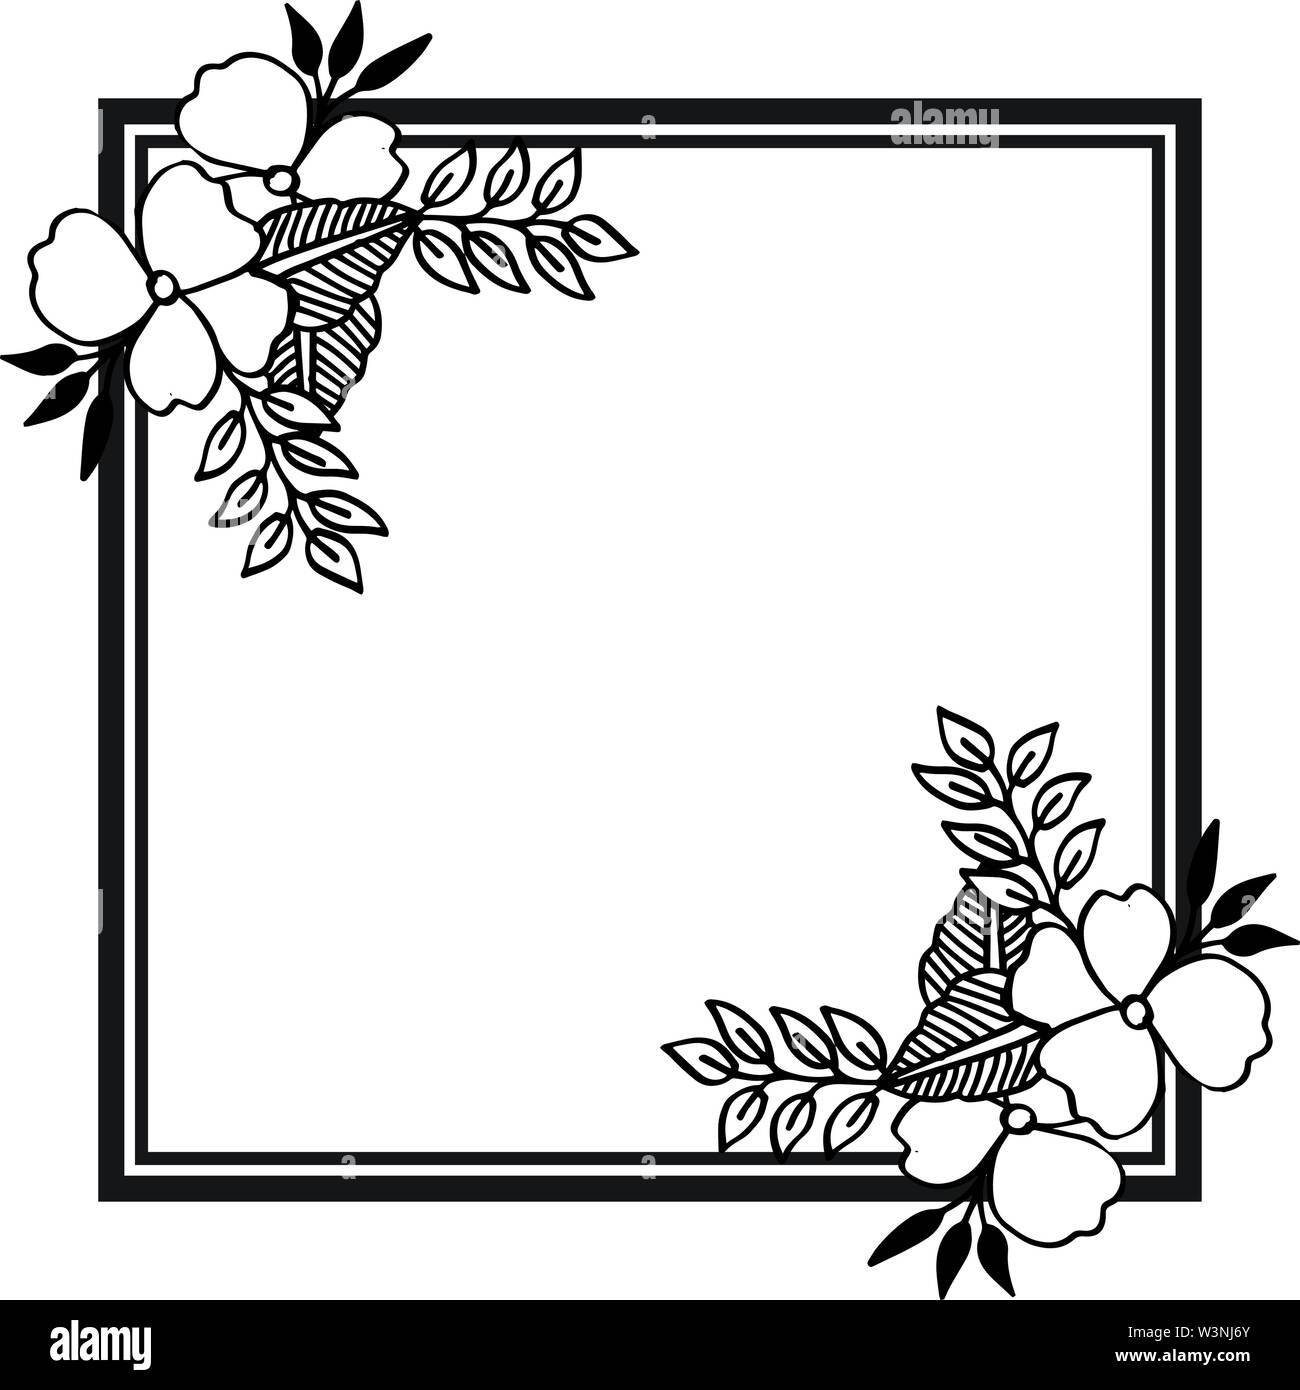 https://c8.alamy.com/comp/W3NJ6Y/beautiful-floral-border-pattern-frame-design-various-greeting-cards-vector-illustration-W3NJ6Y.jpg